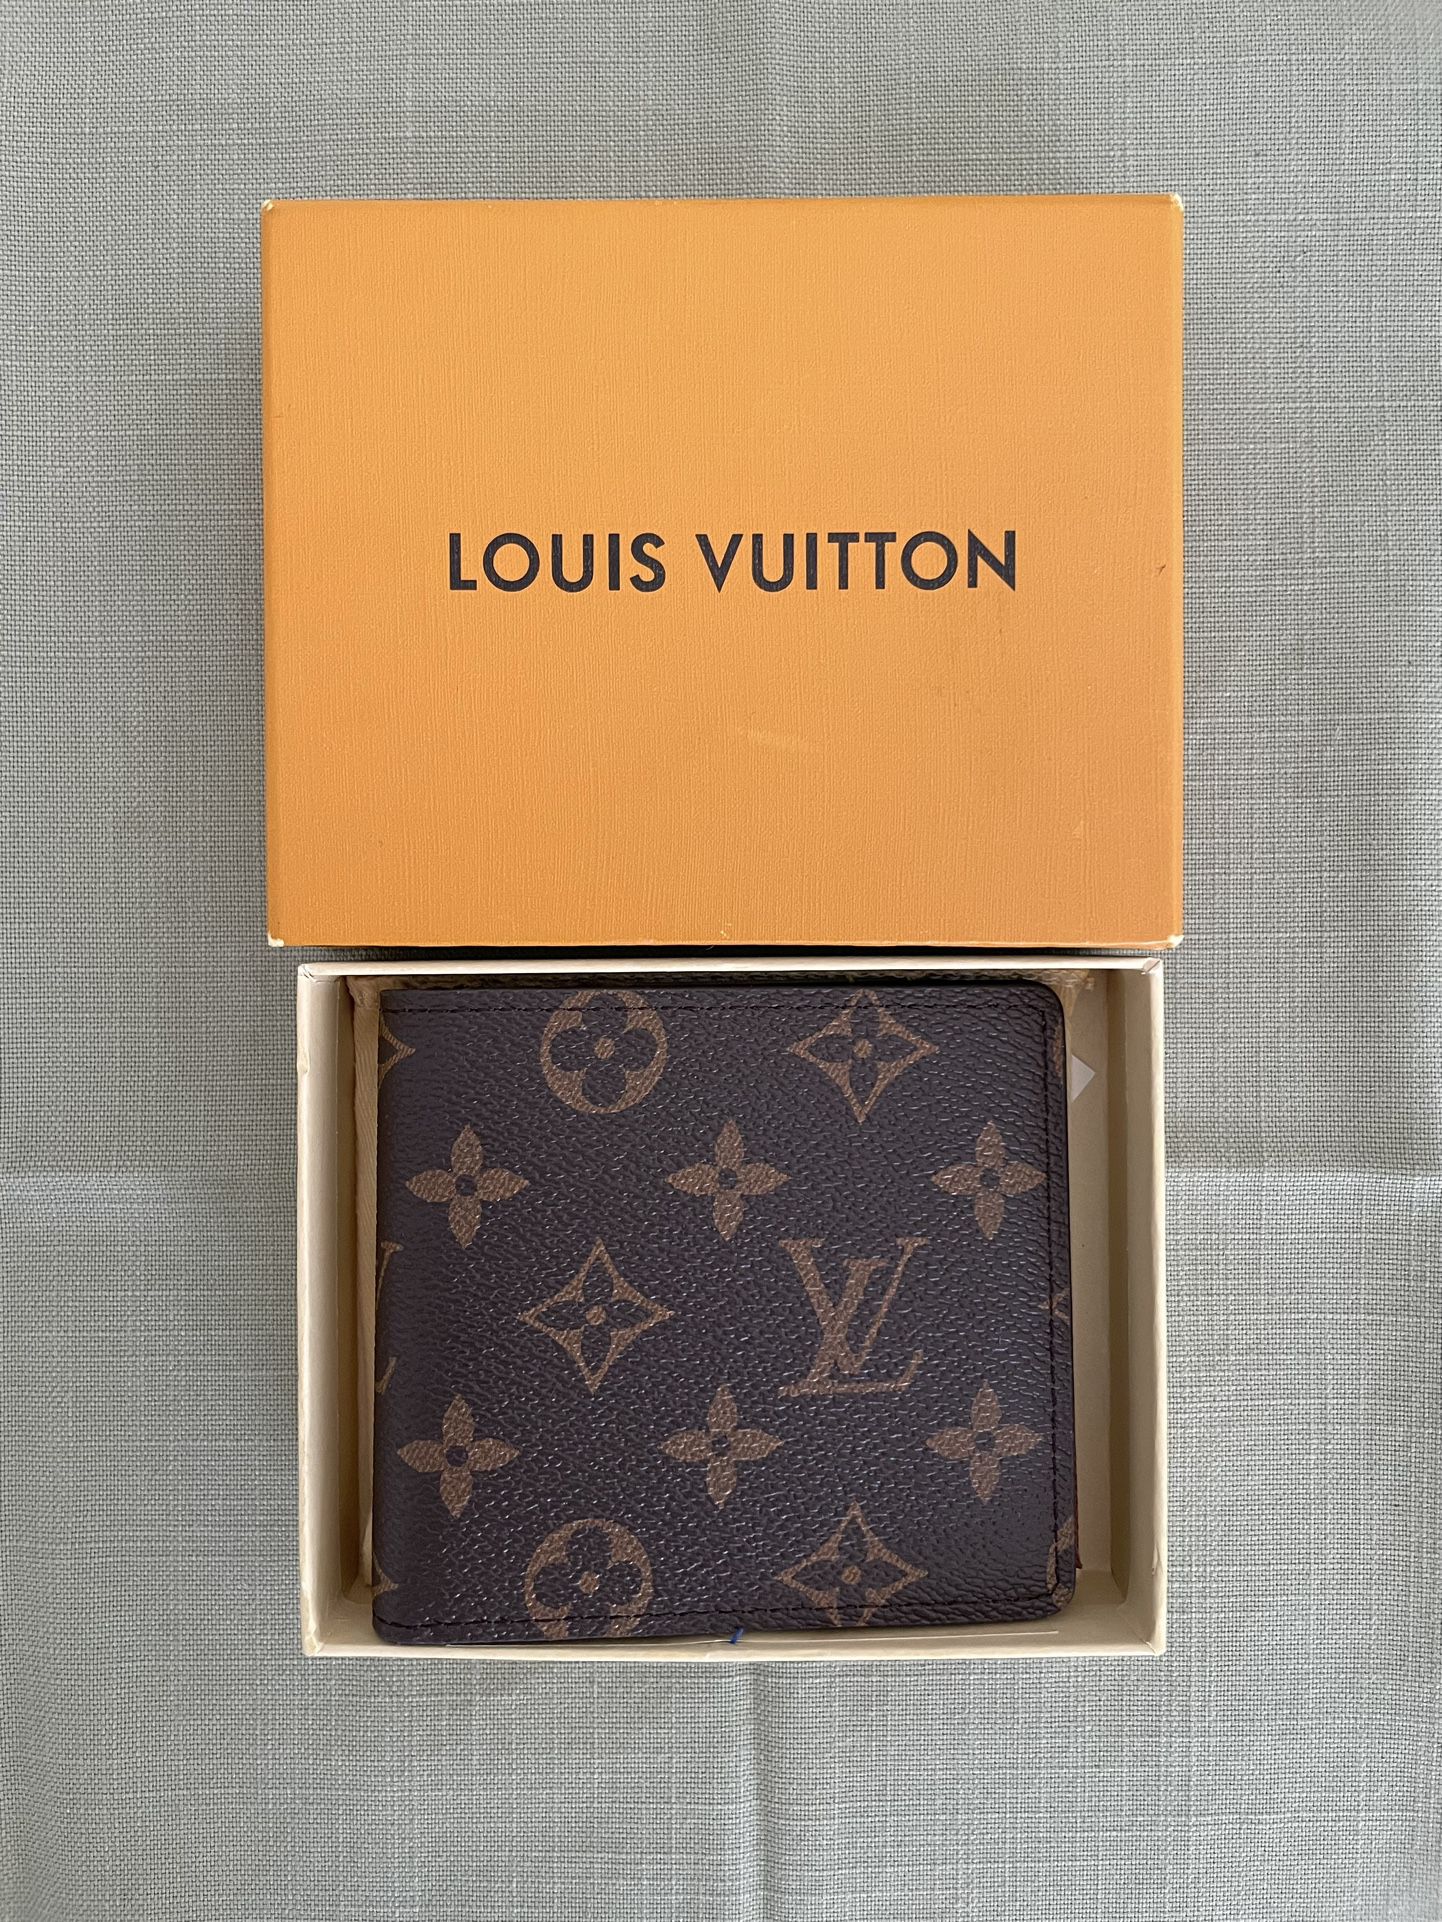 Louis Vuitton Canvas Brown Wallet for Sale in Fort Lauderdale, FL